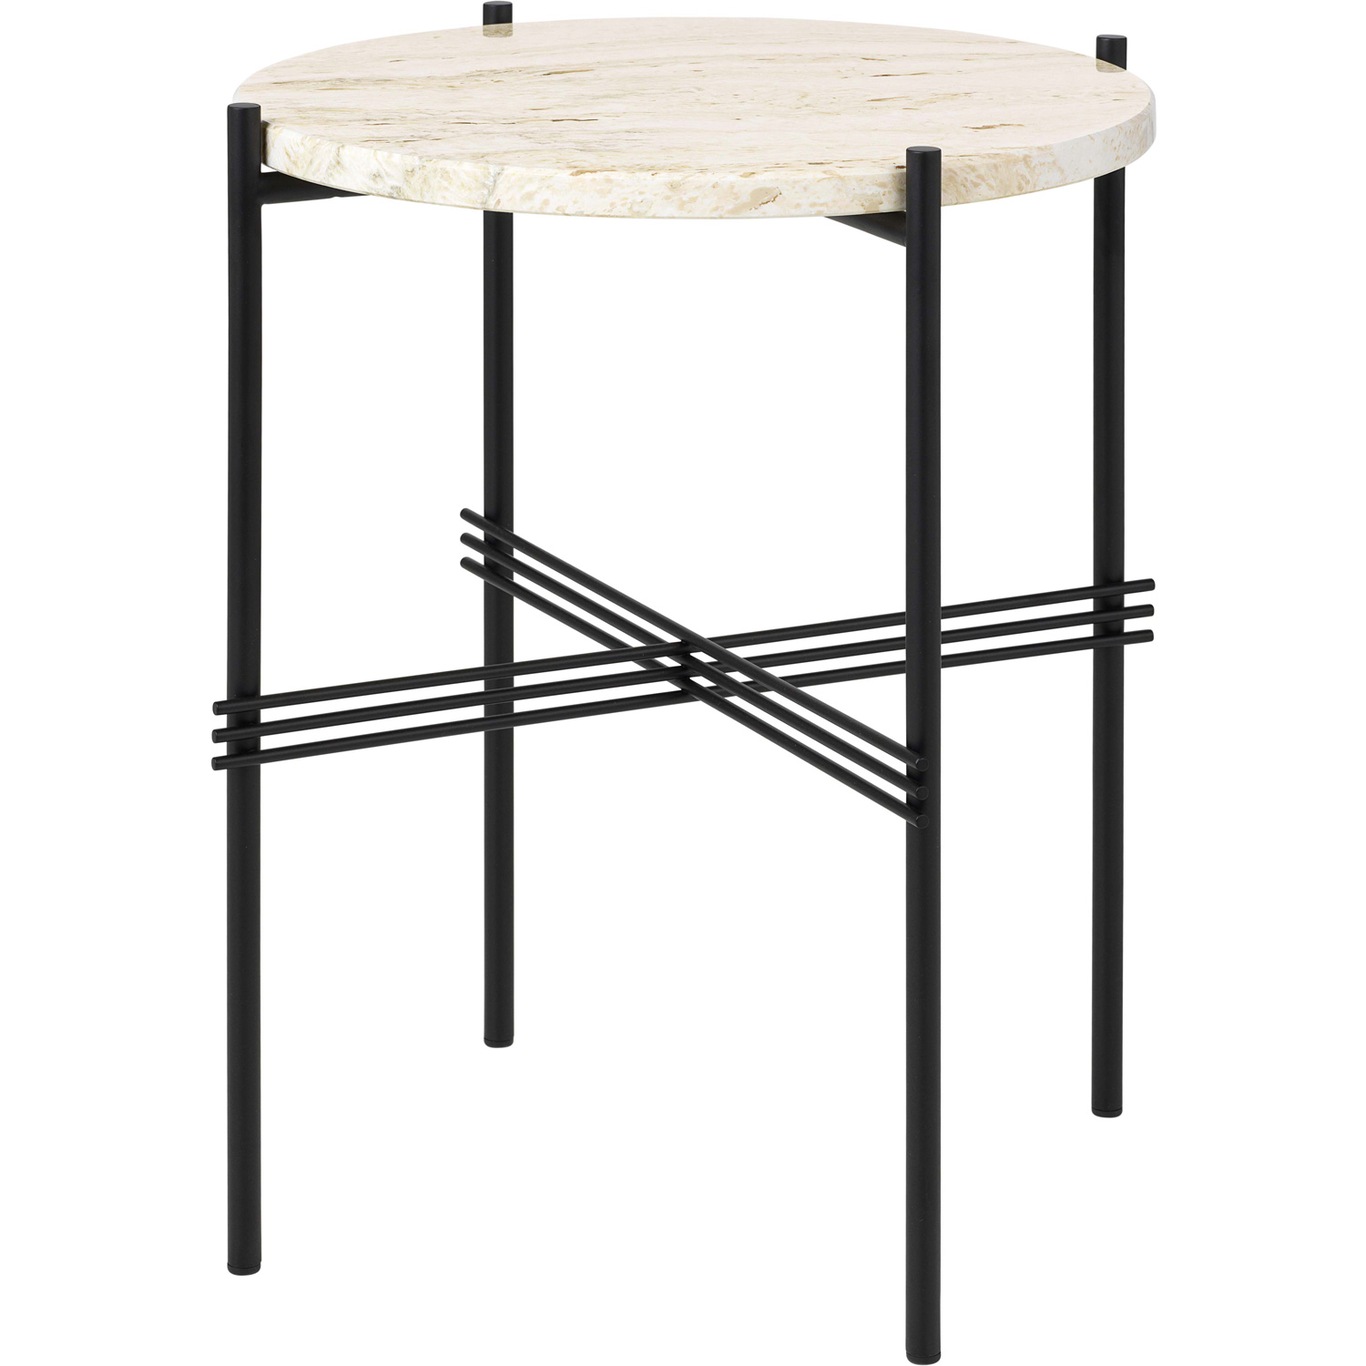 TS Side Table 40 cm, Black / Neutral white Travertine